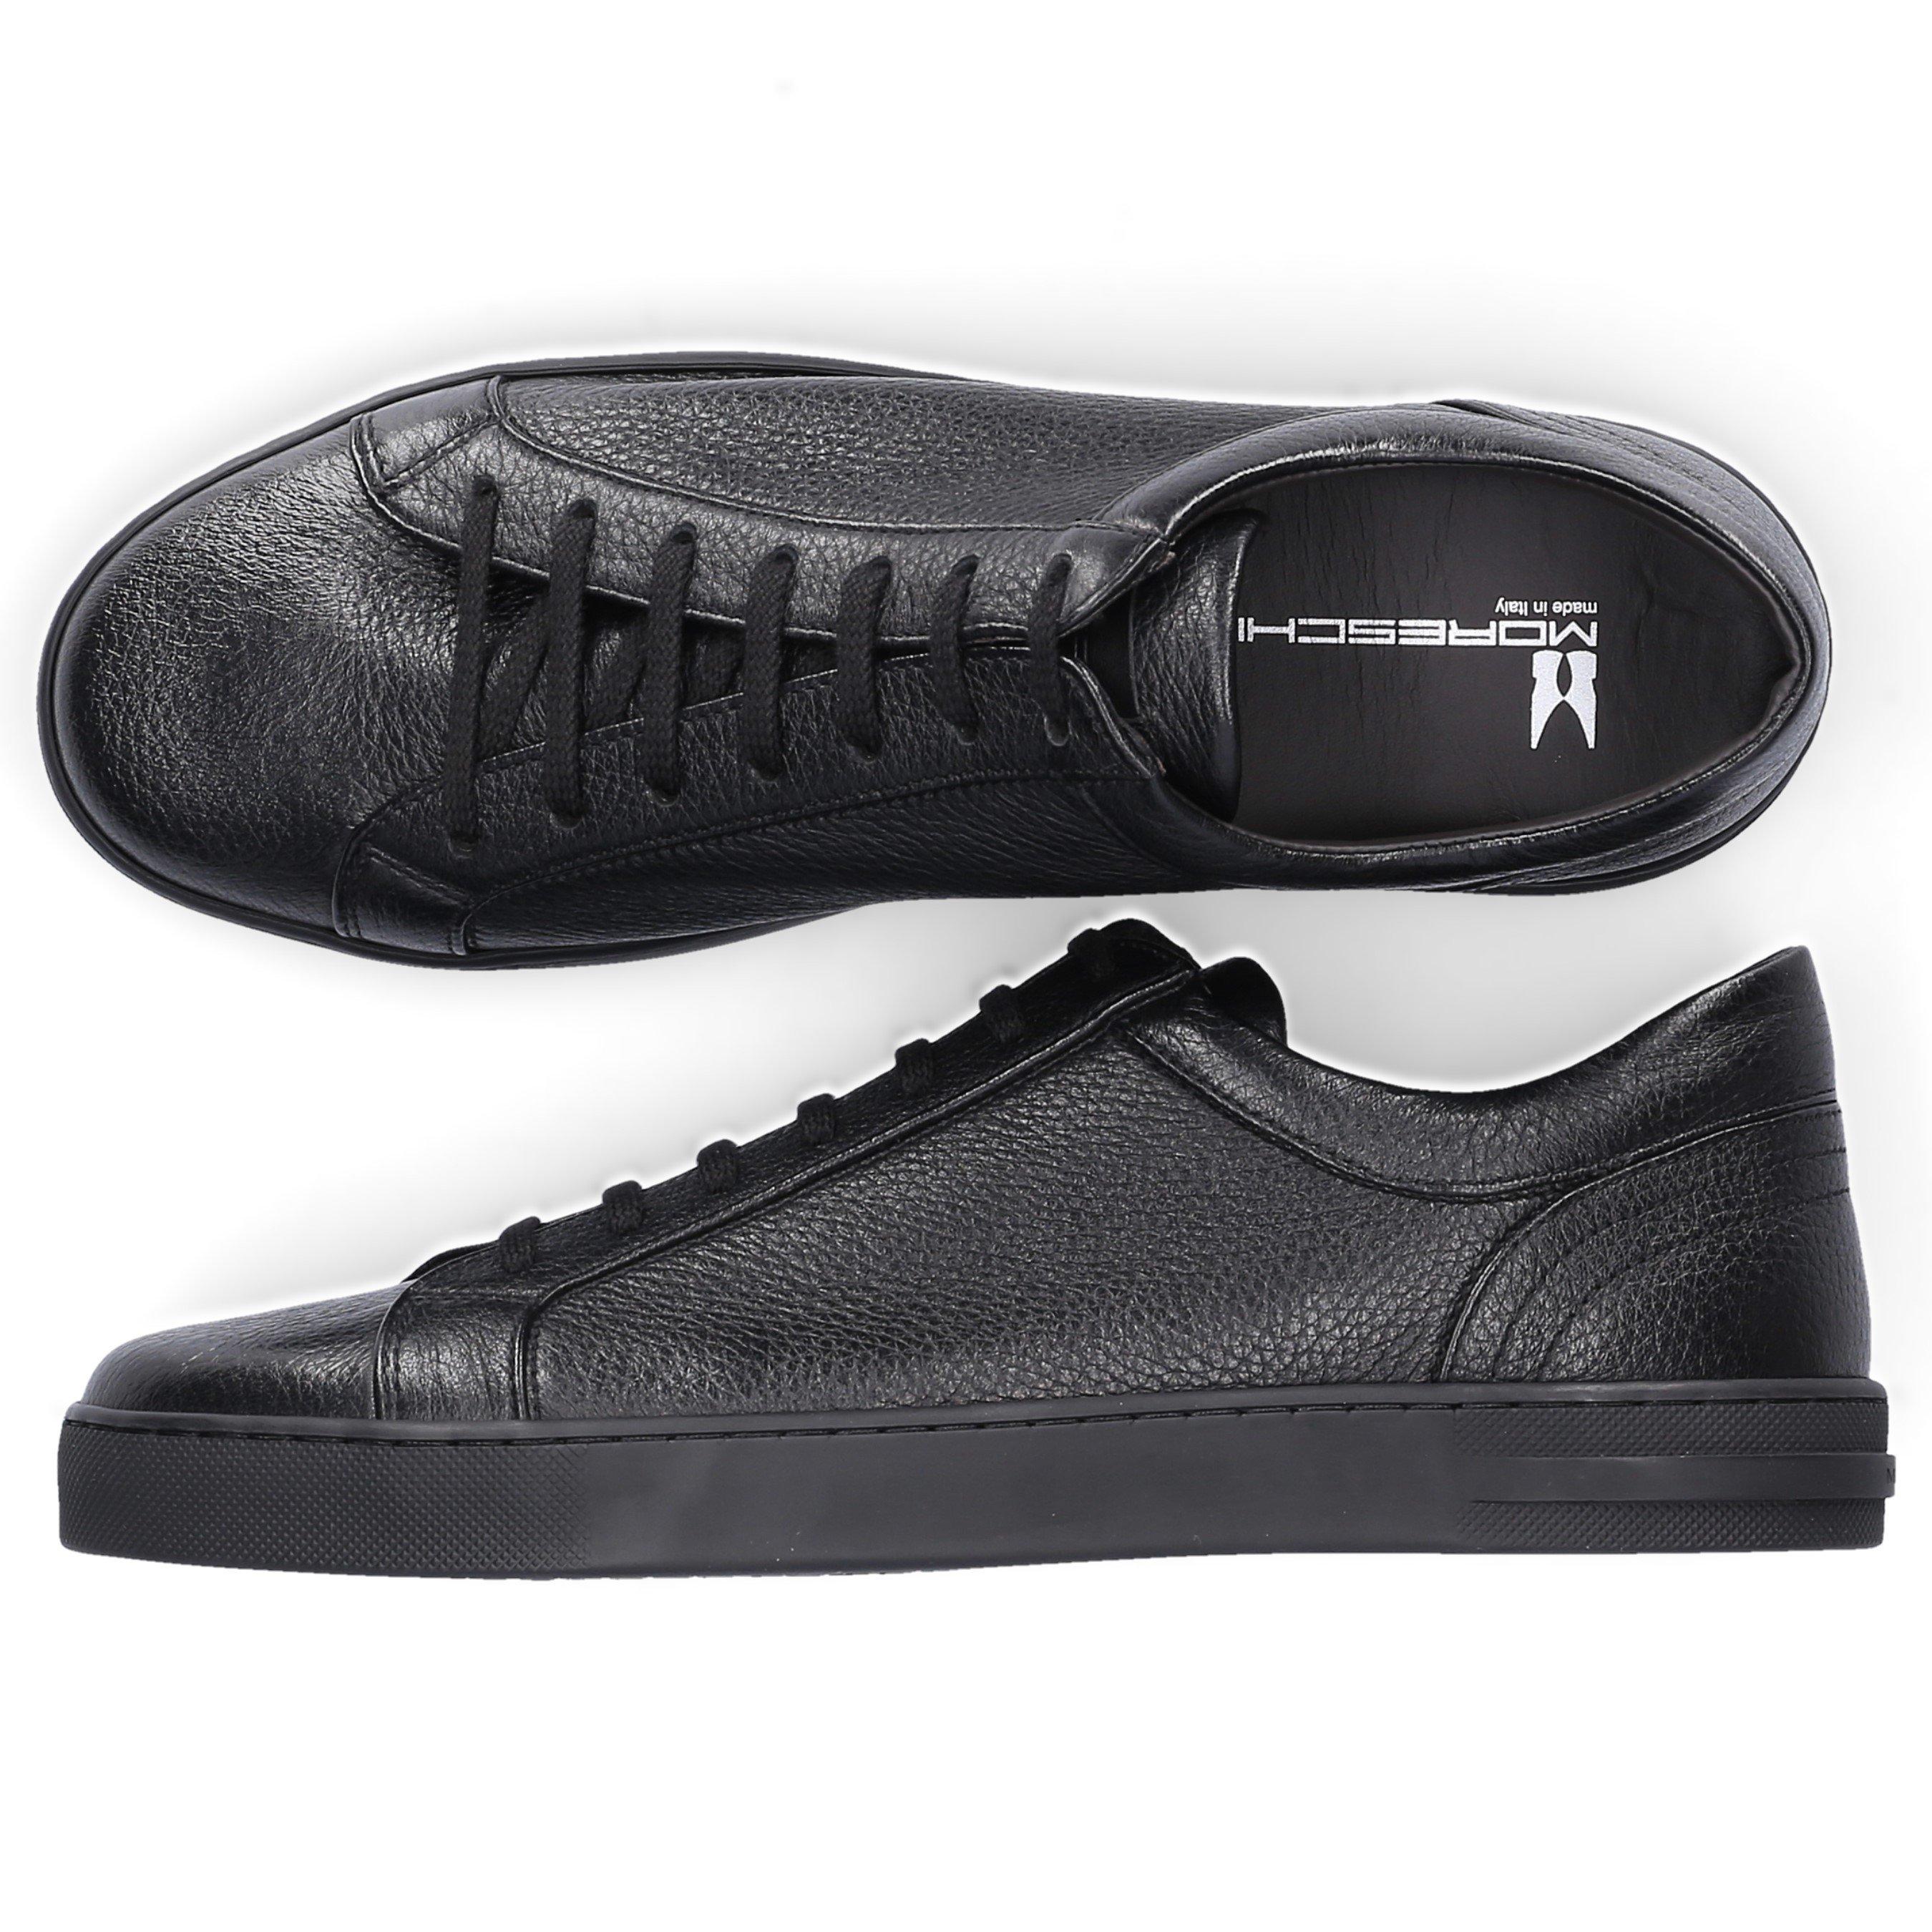 Moreschi Leather Sneakers Black Ibiza 2 Black for Men - Lyst